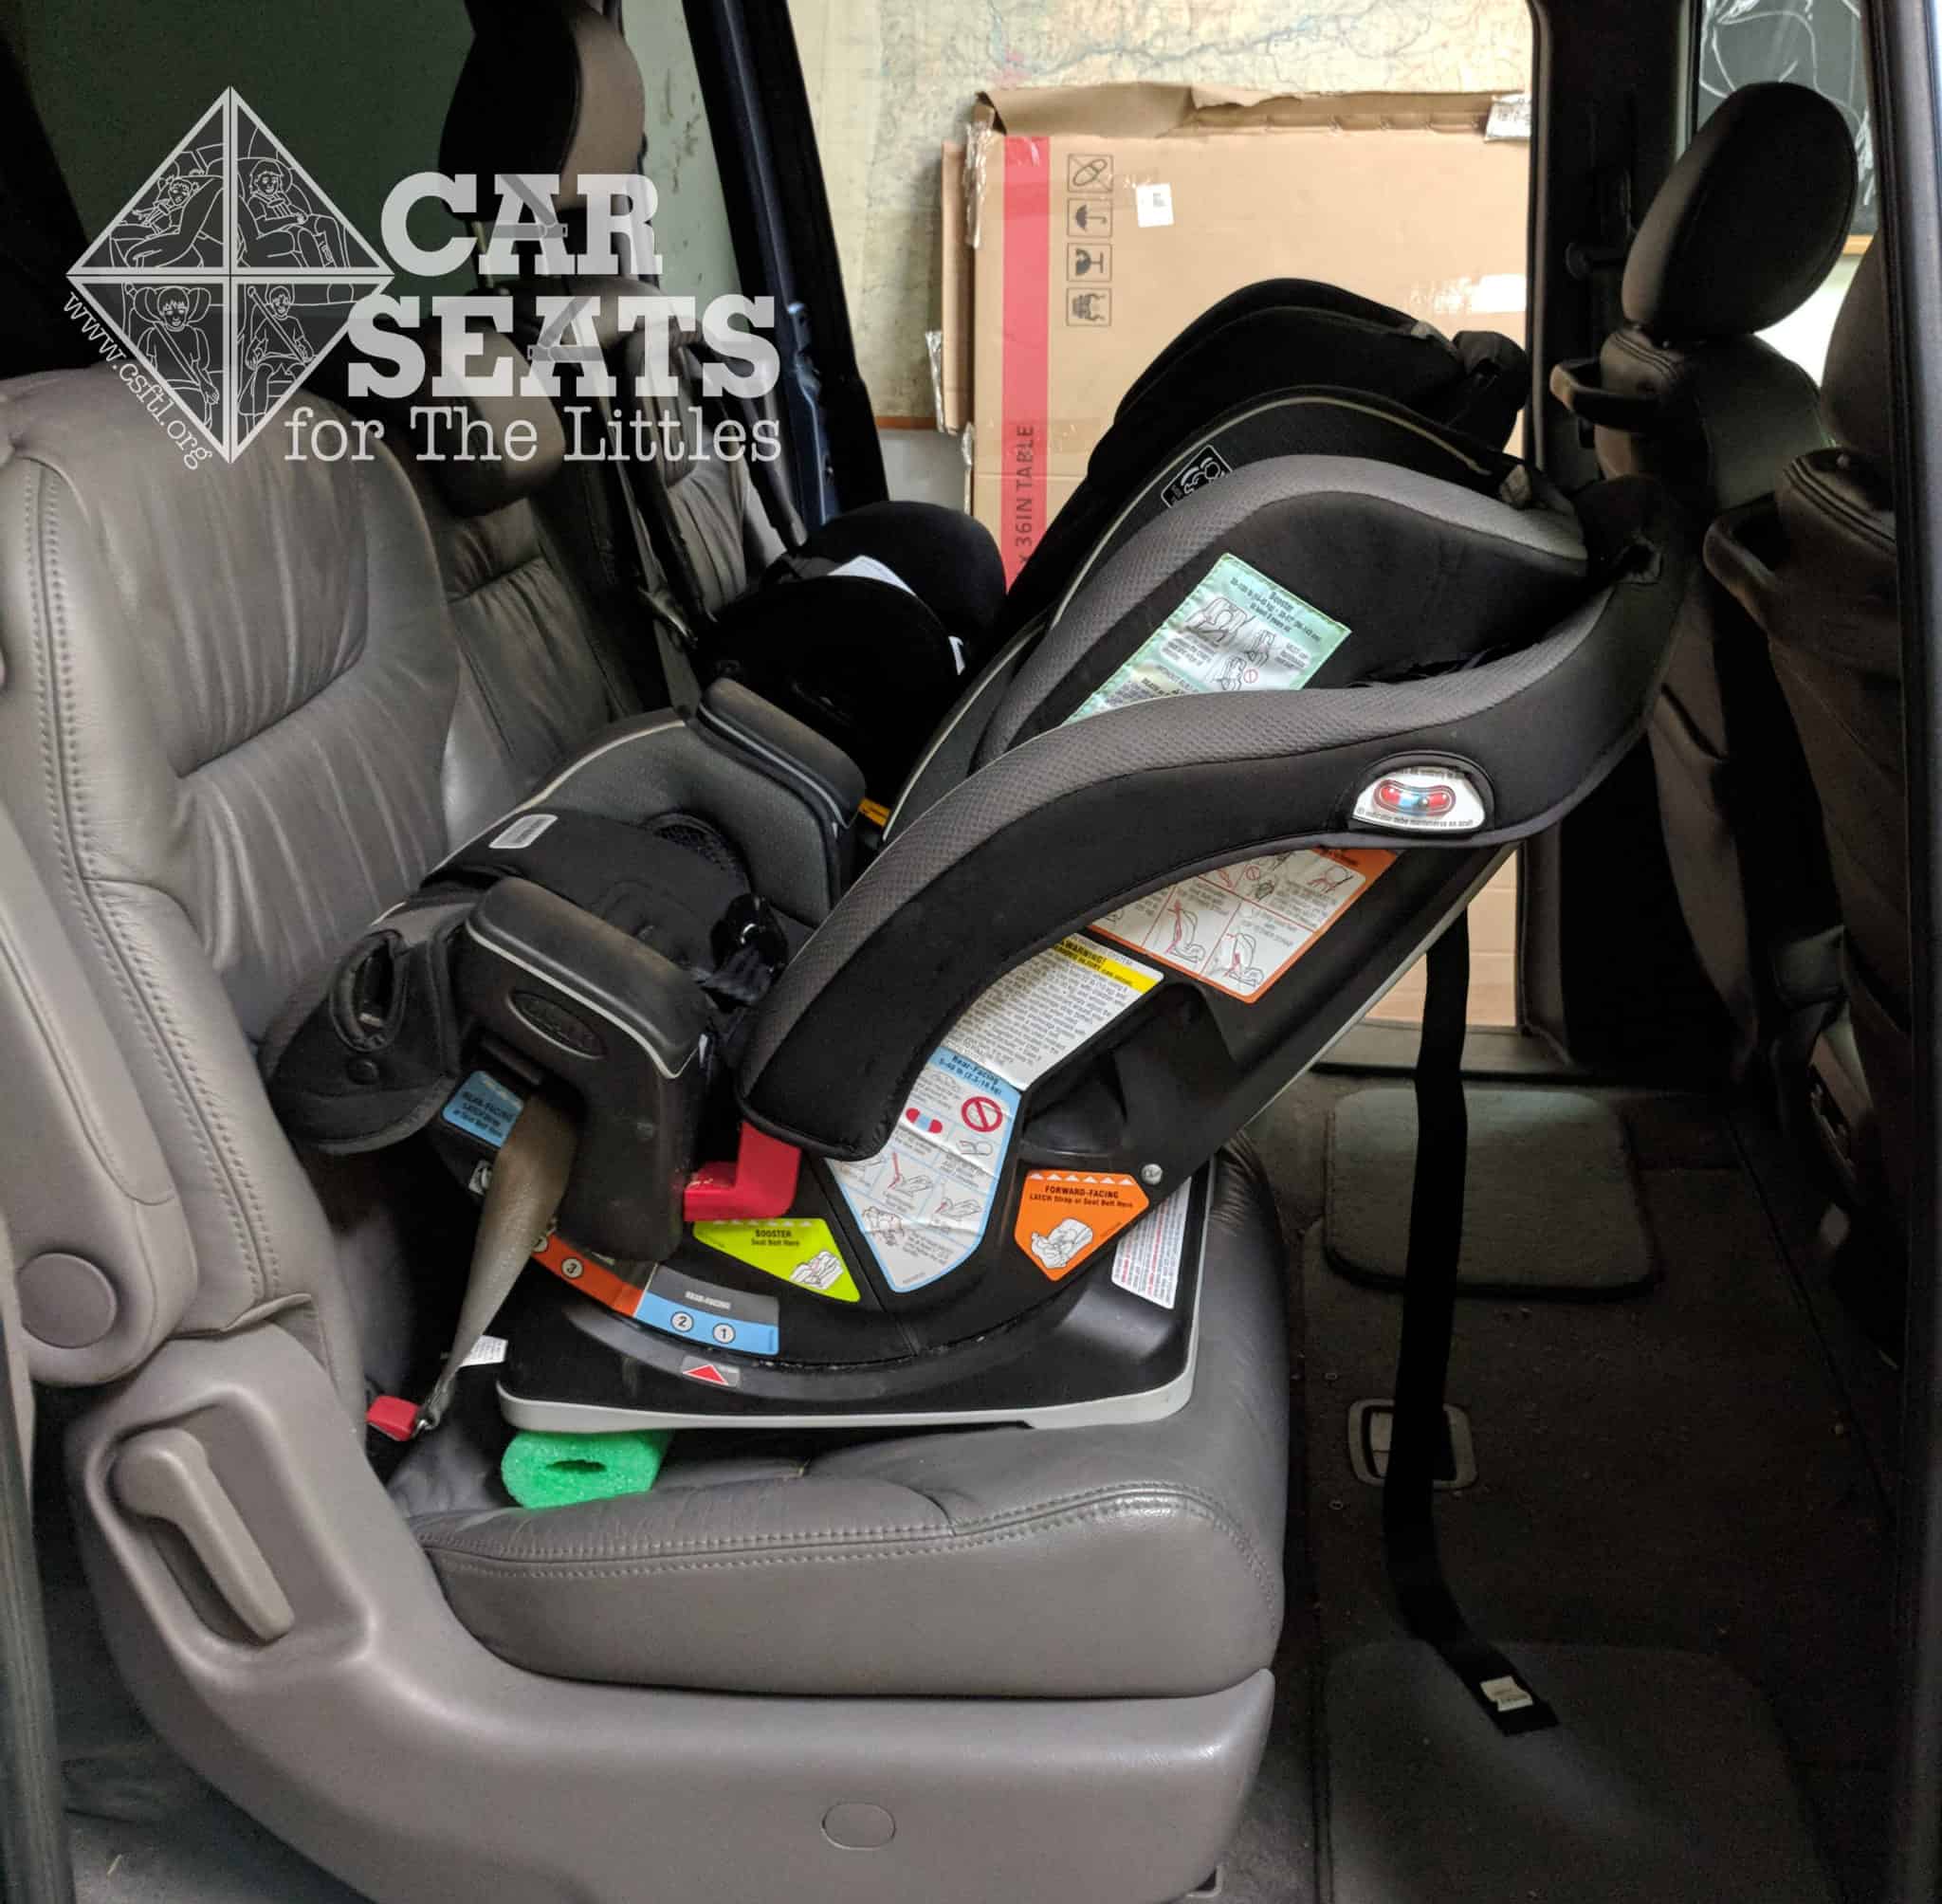 baby jogger city view car seat reviews